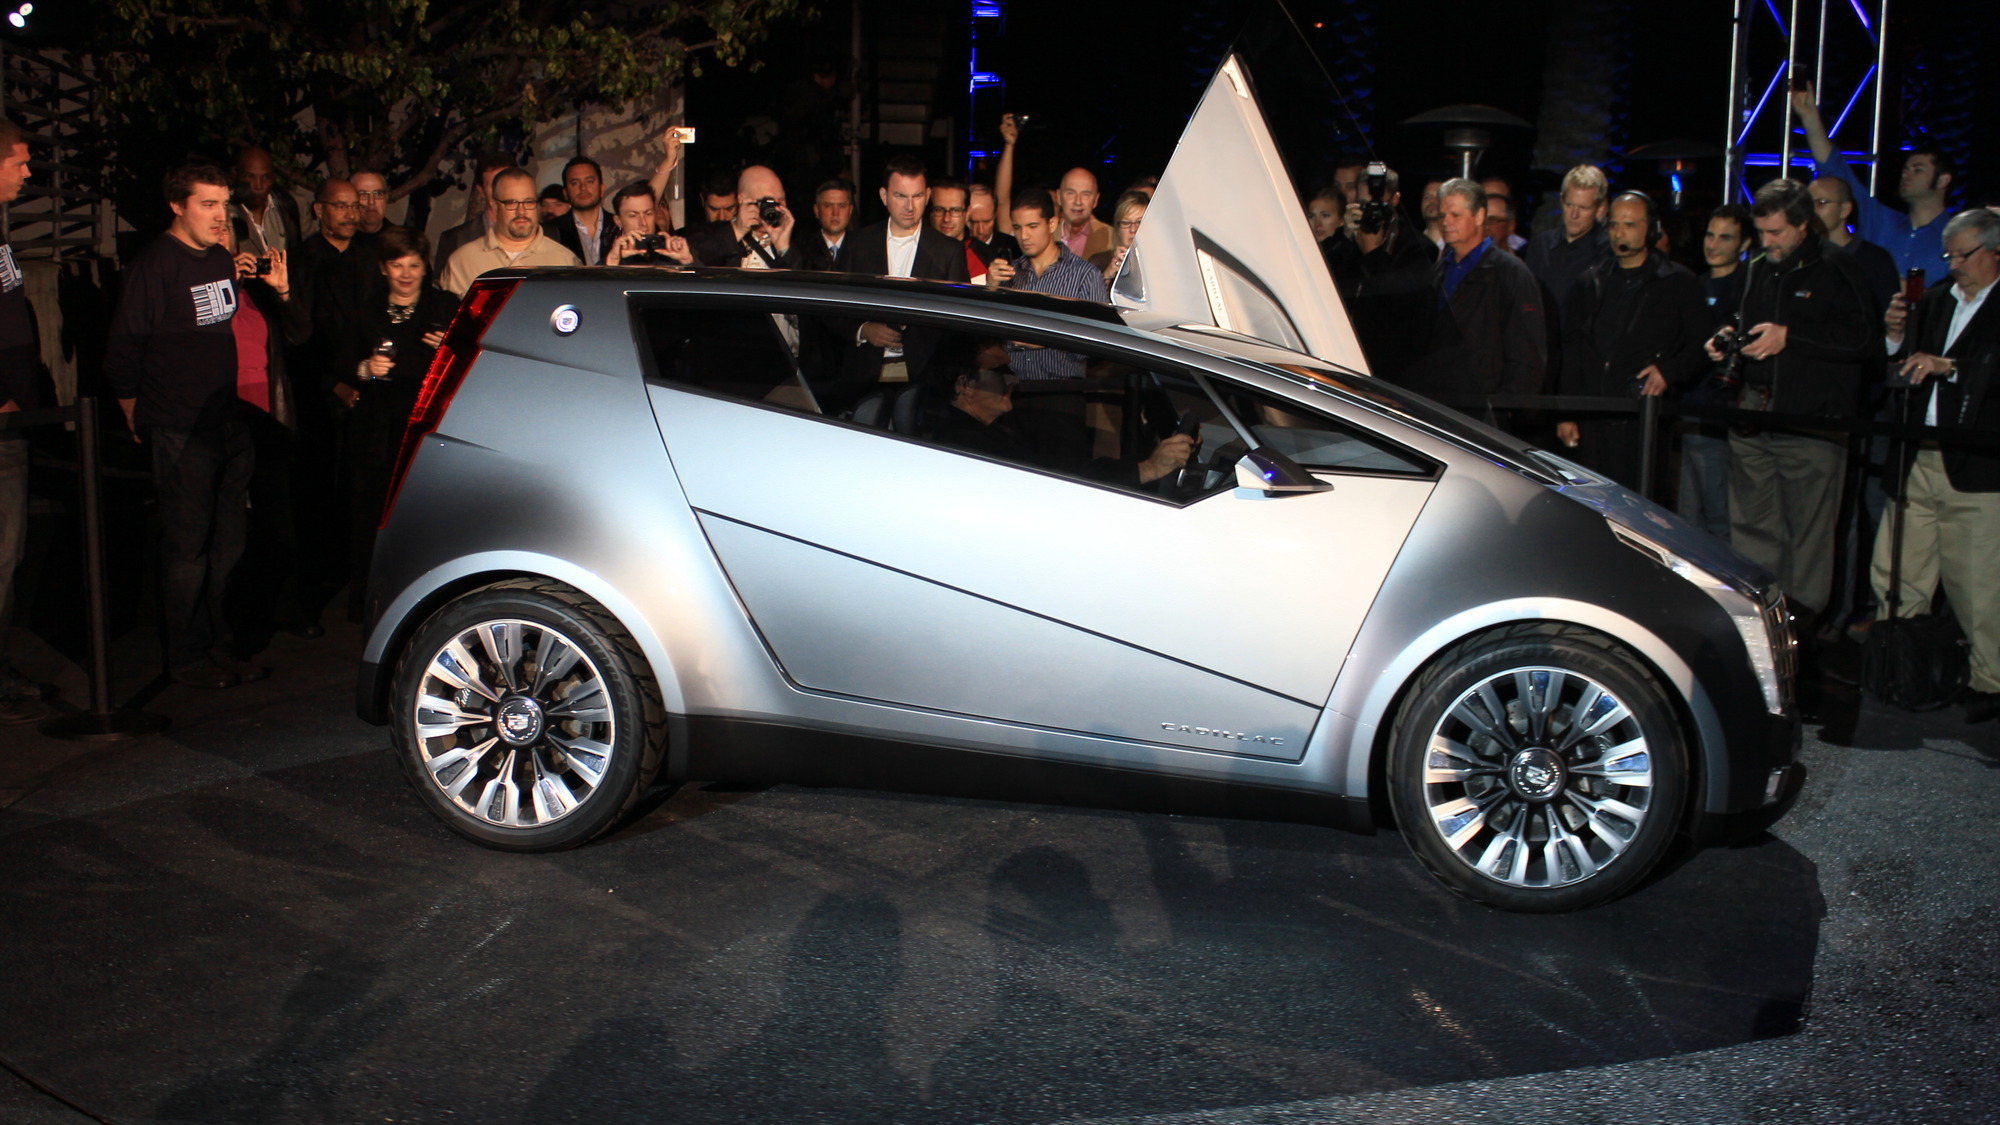 2010 Cadillac Urban Luxury Concept